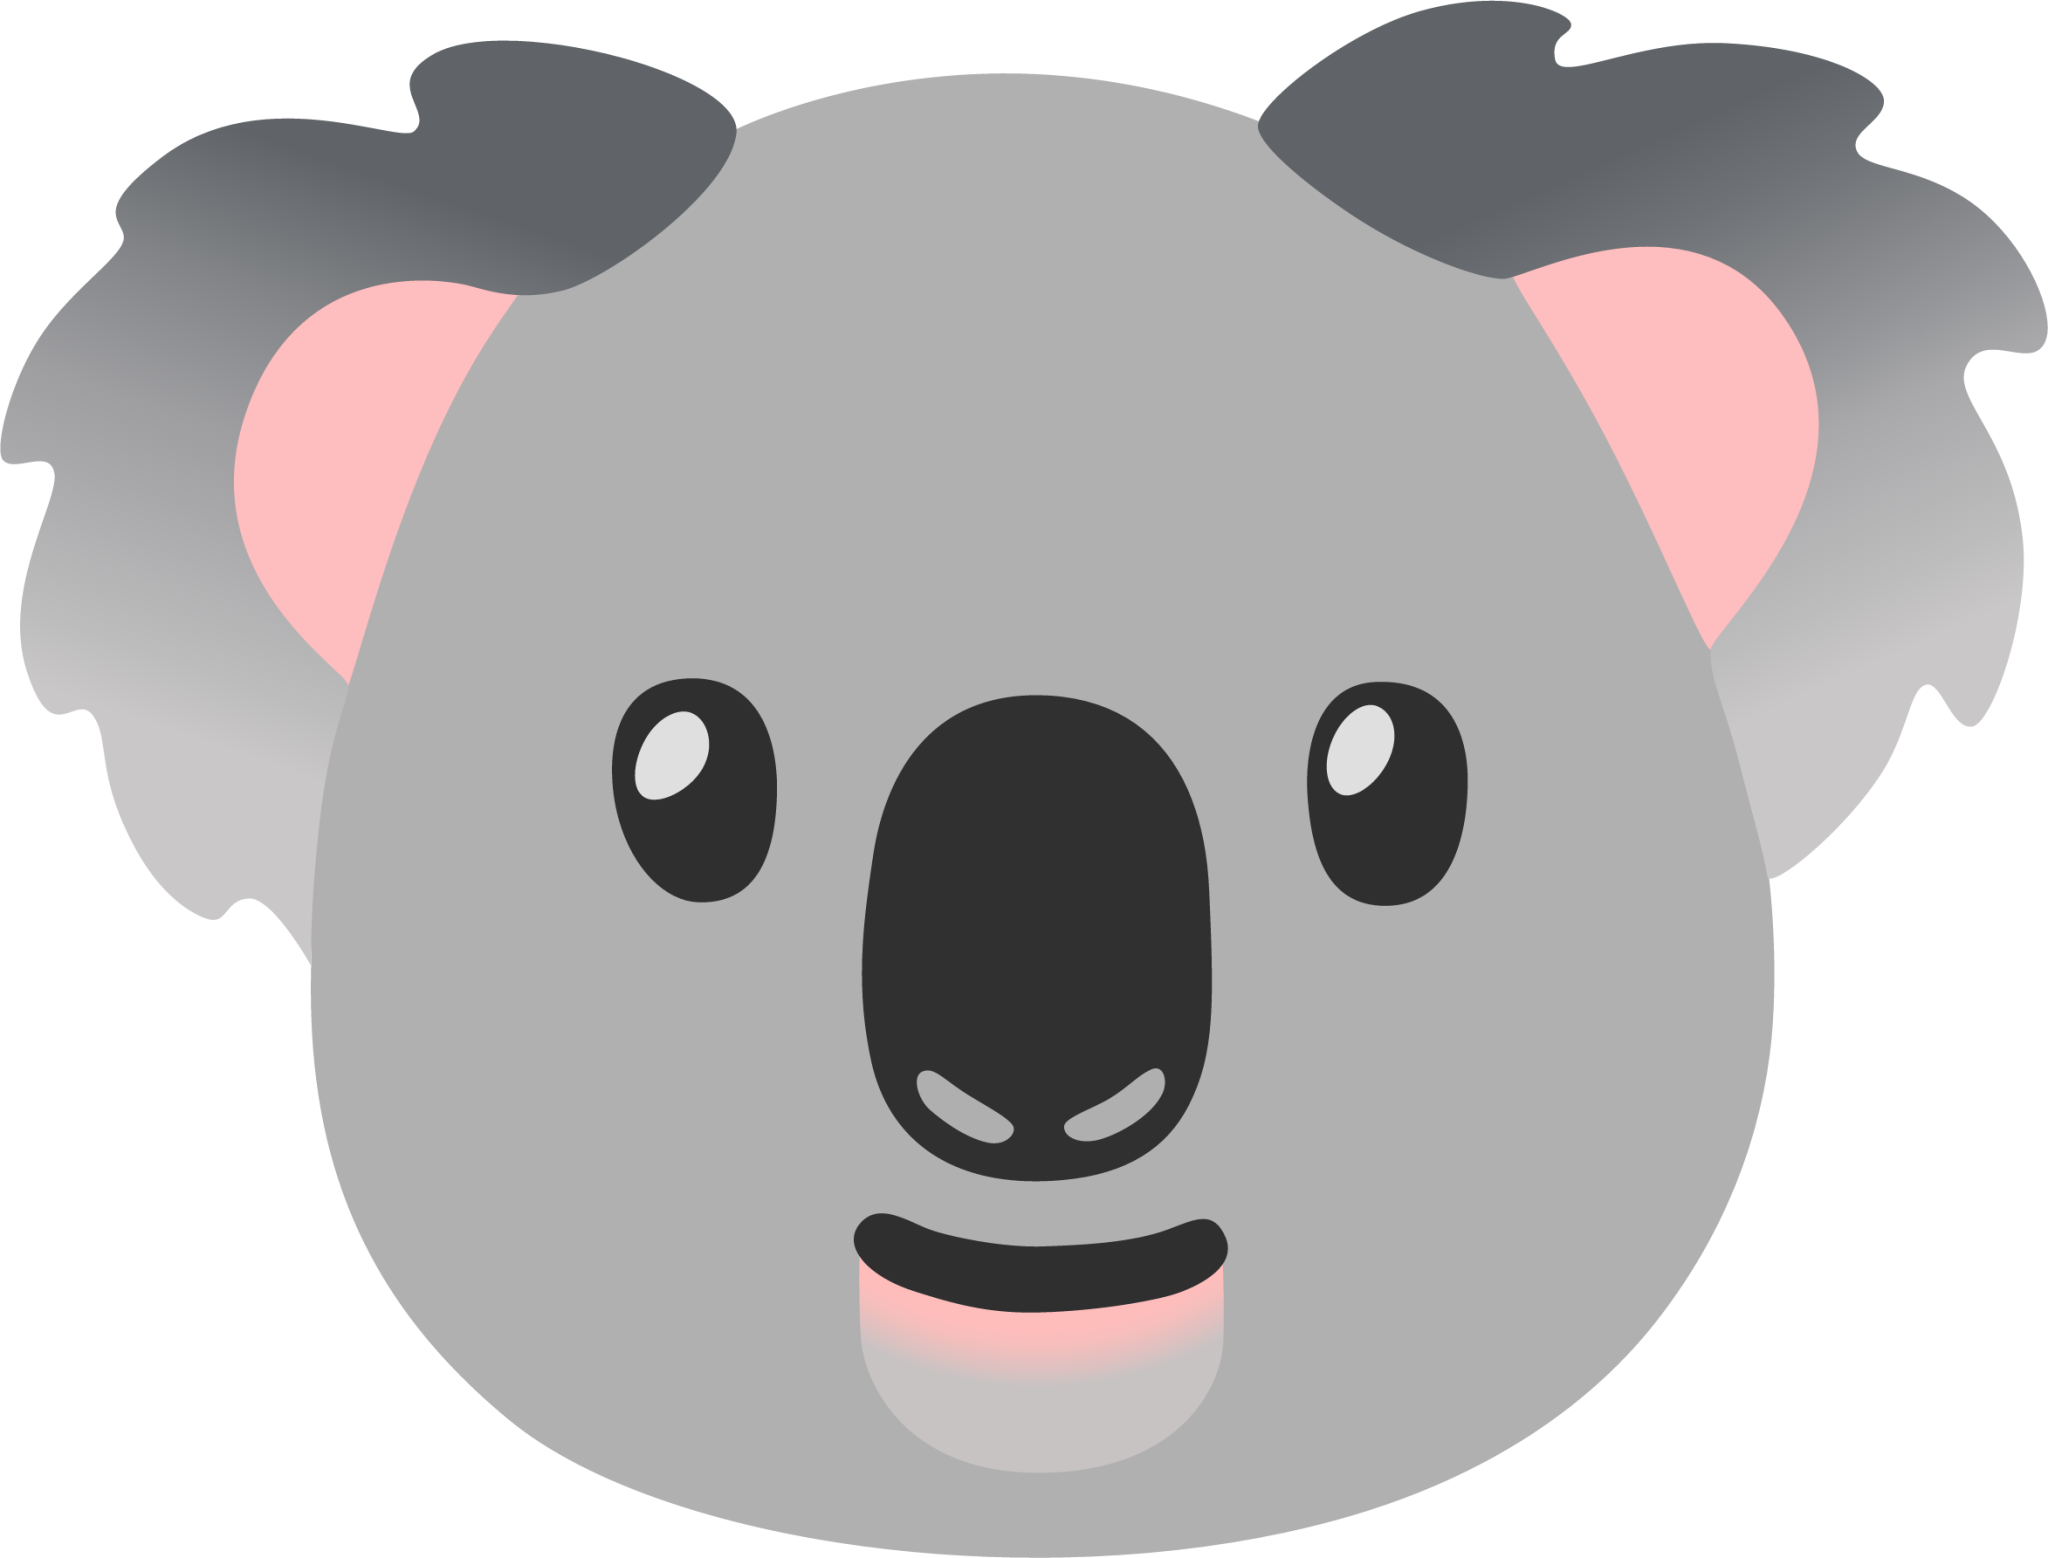 koala face clip art